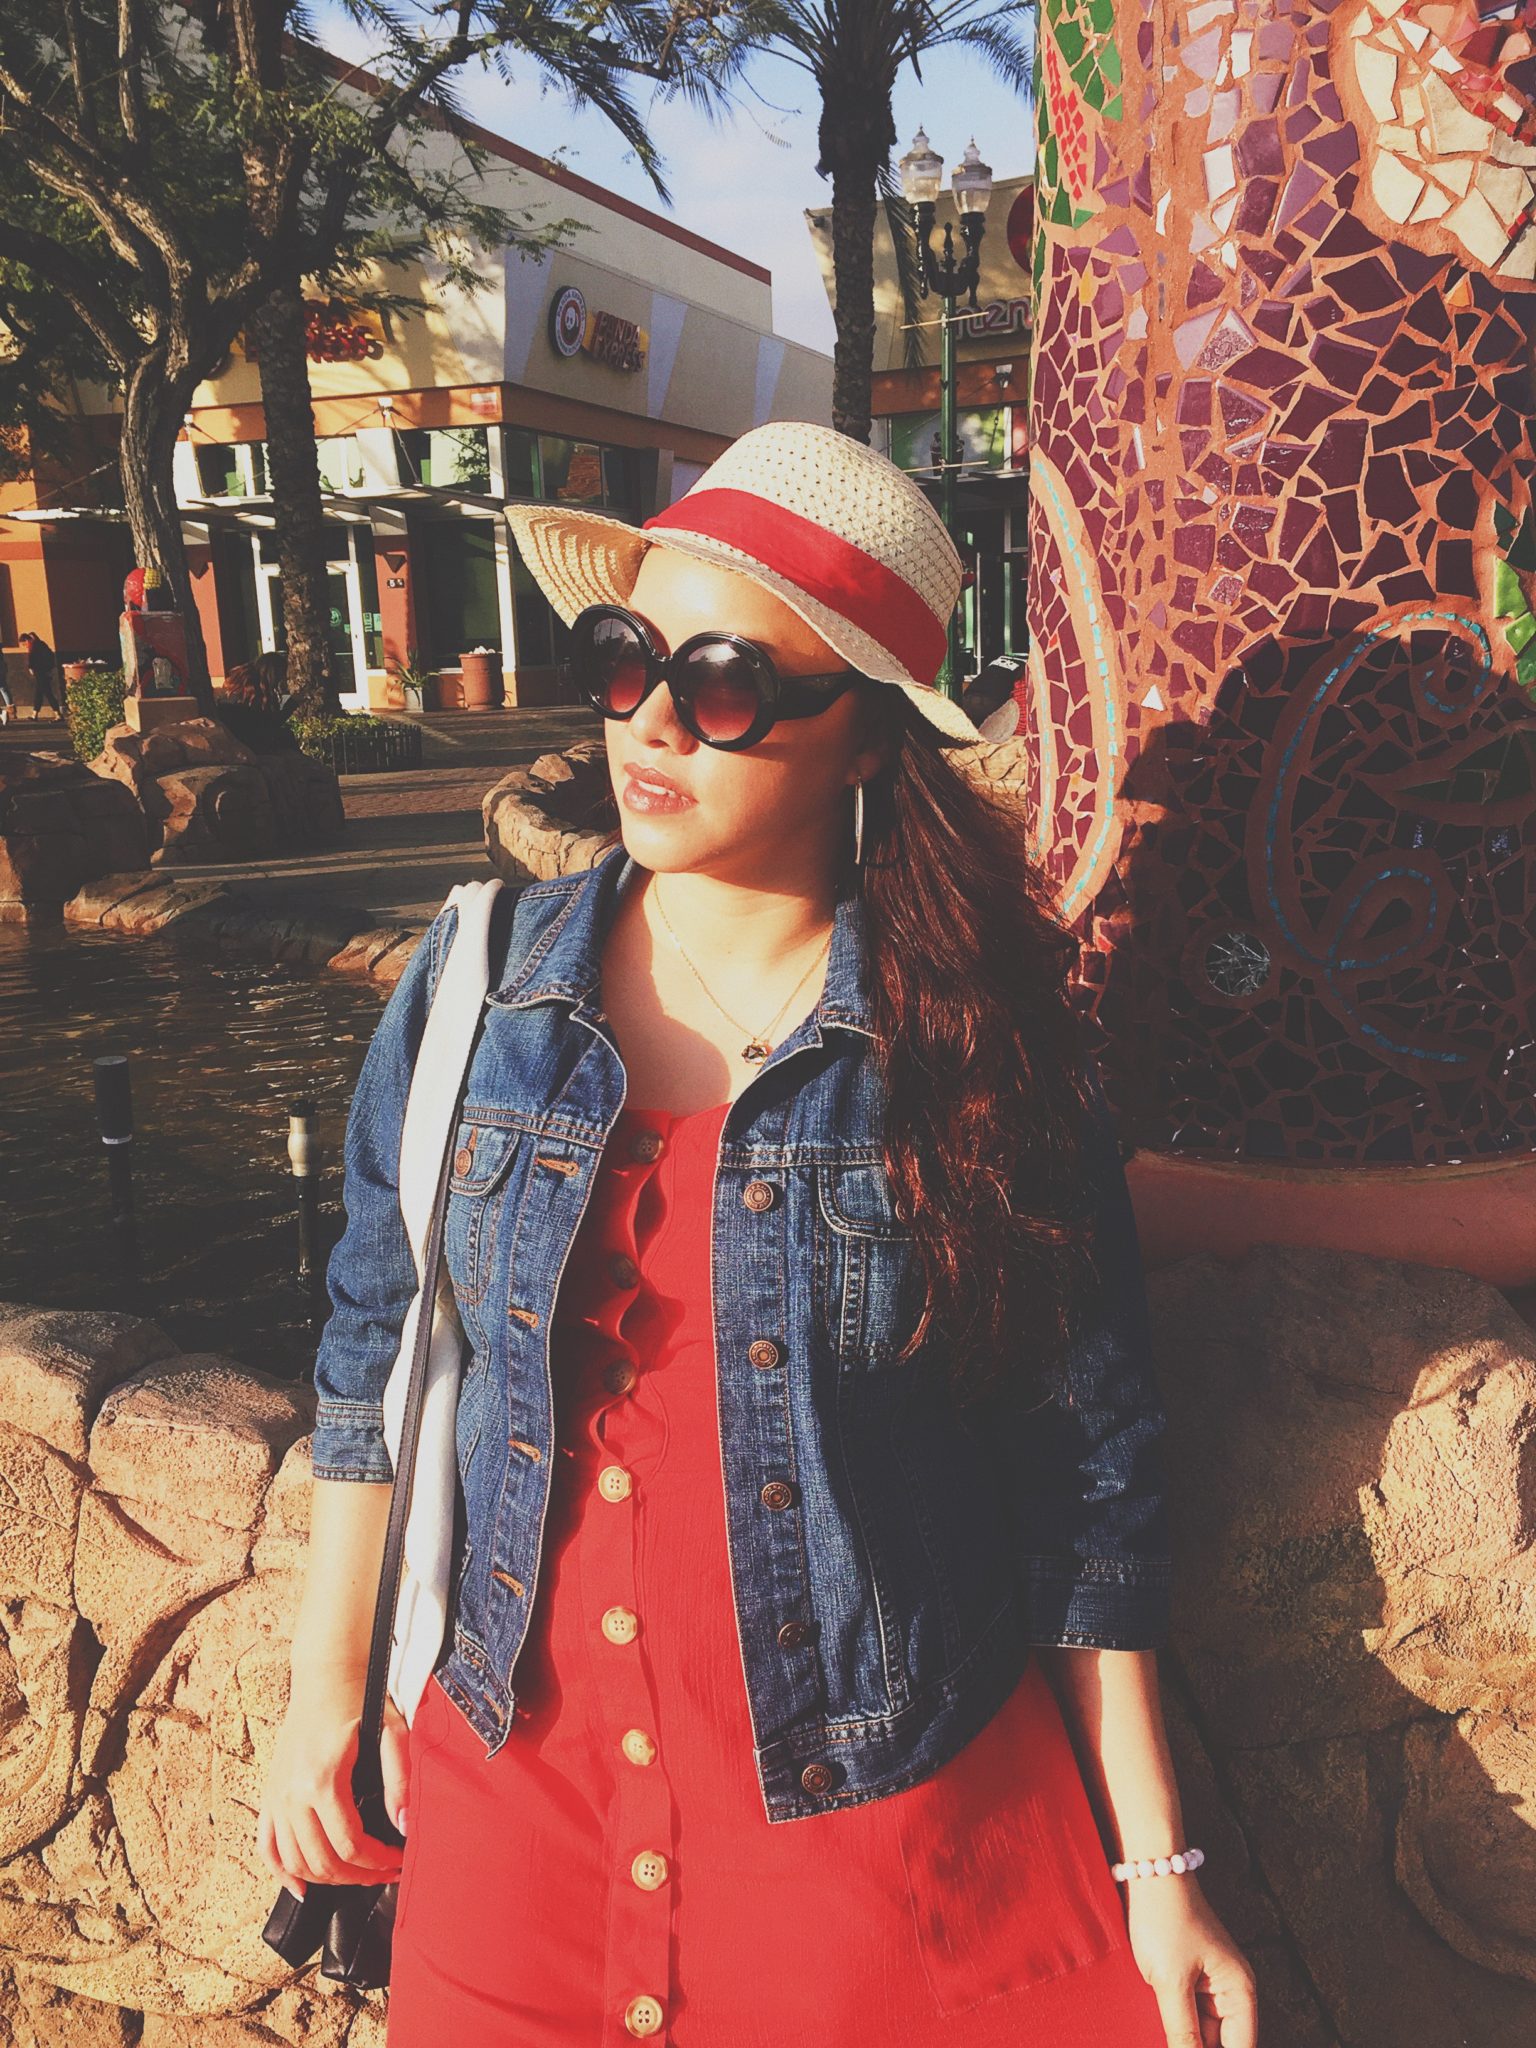  Instagram: @pslilyboutique, Pinterest, Los Angeles fashion blogger, top fashion blog, best fashion blog, fashion & personal style blog, travel blog, travel blogger, LA fashion blogger, round oversized sunglasses, straw hat, denim crop jacket